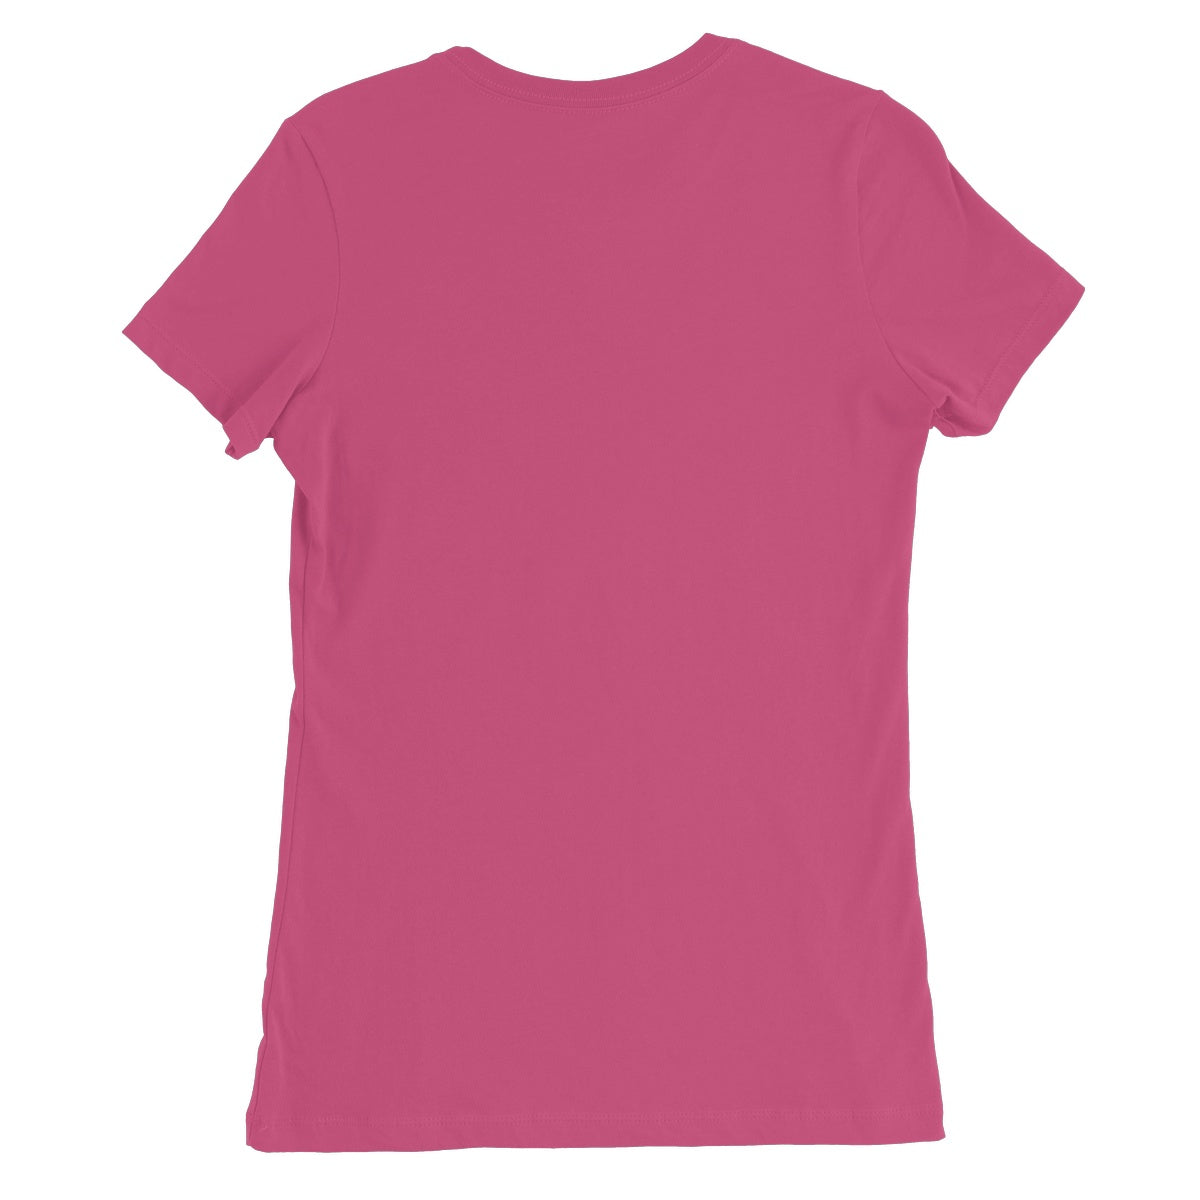 AQUA HMP2 - 05 - Kinder - Feines Jersey-T-Shirt für Frauen